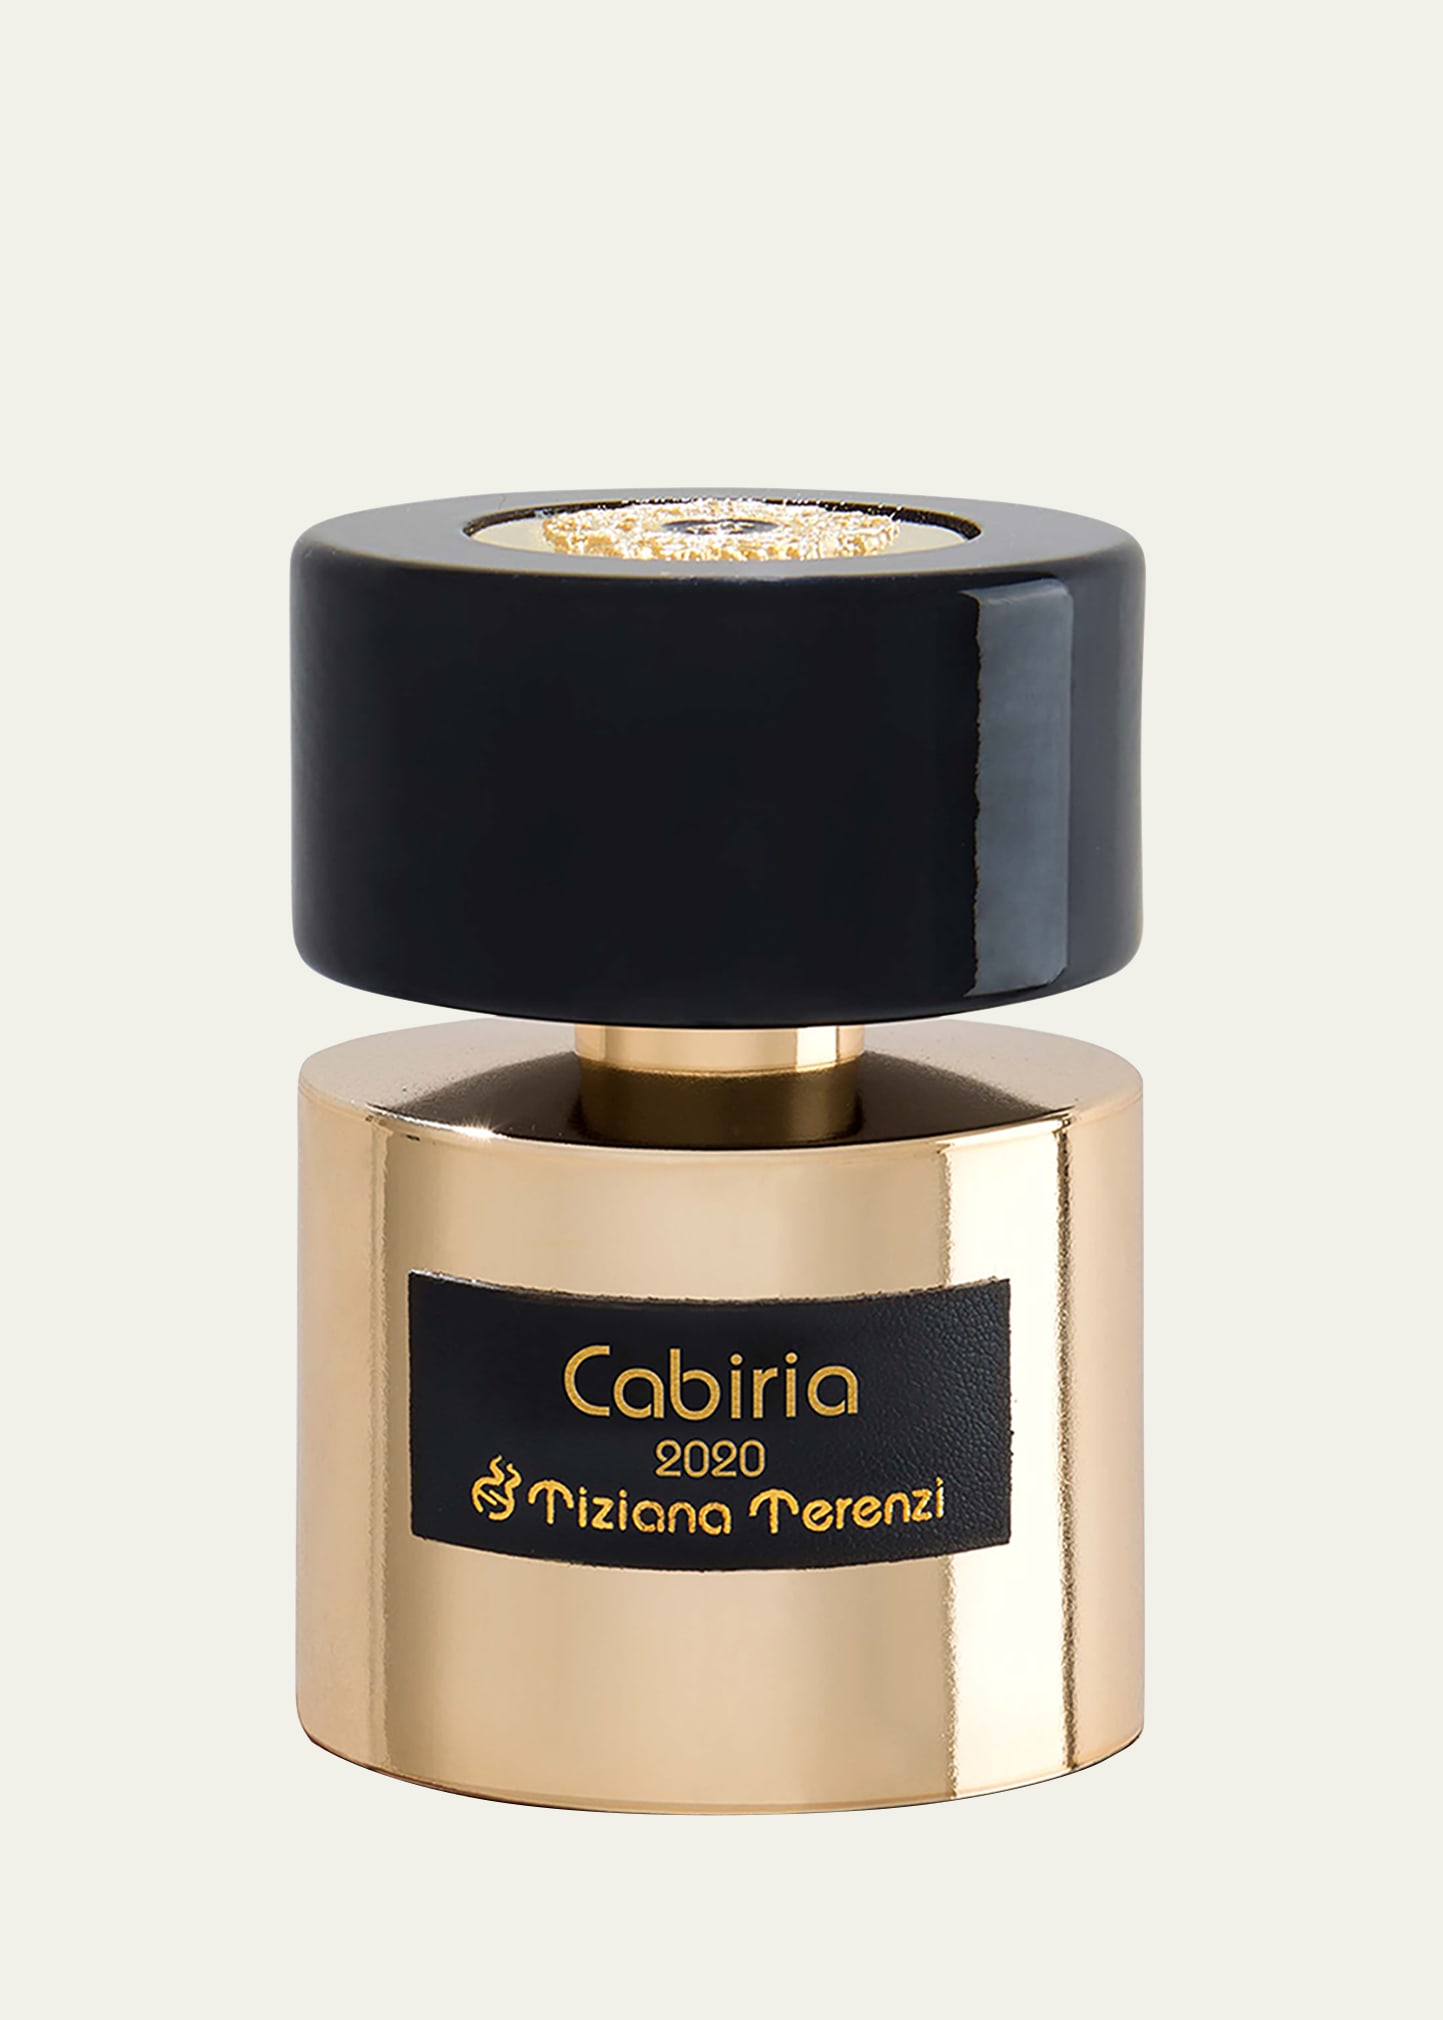 3.4 oz. Cabiria Extrait de Parfum